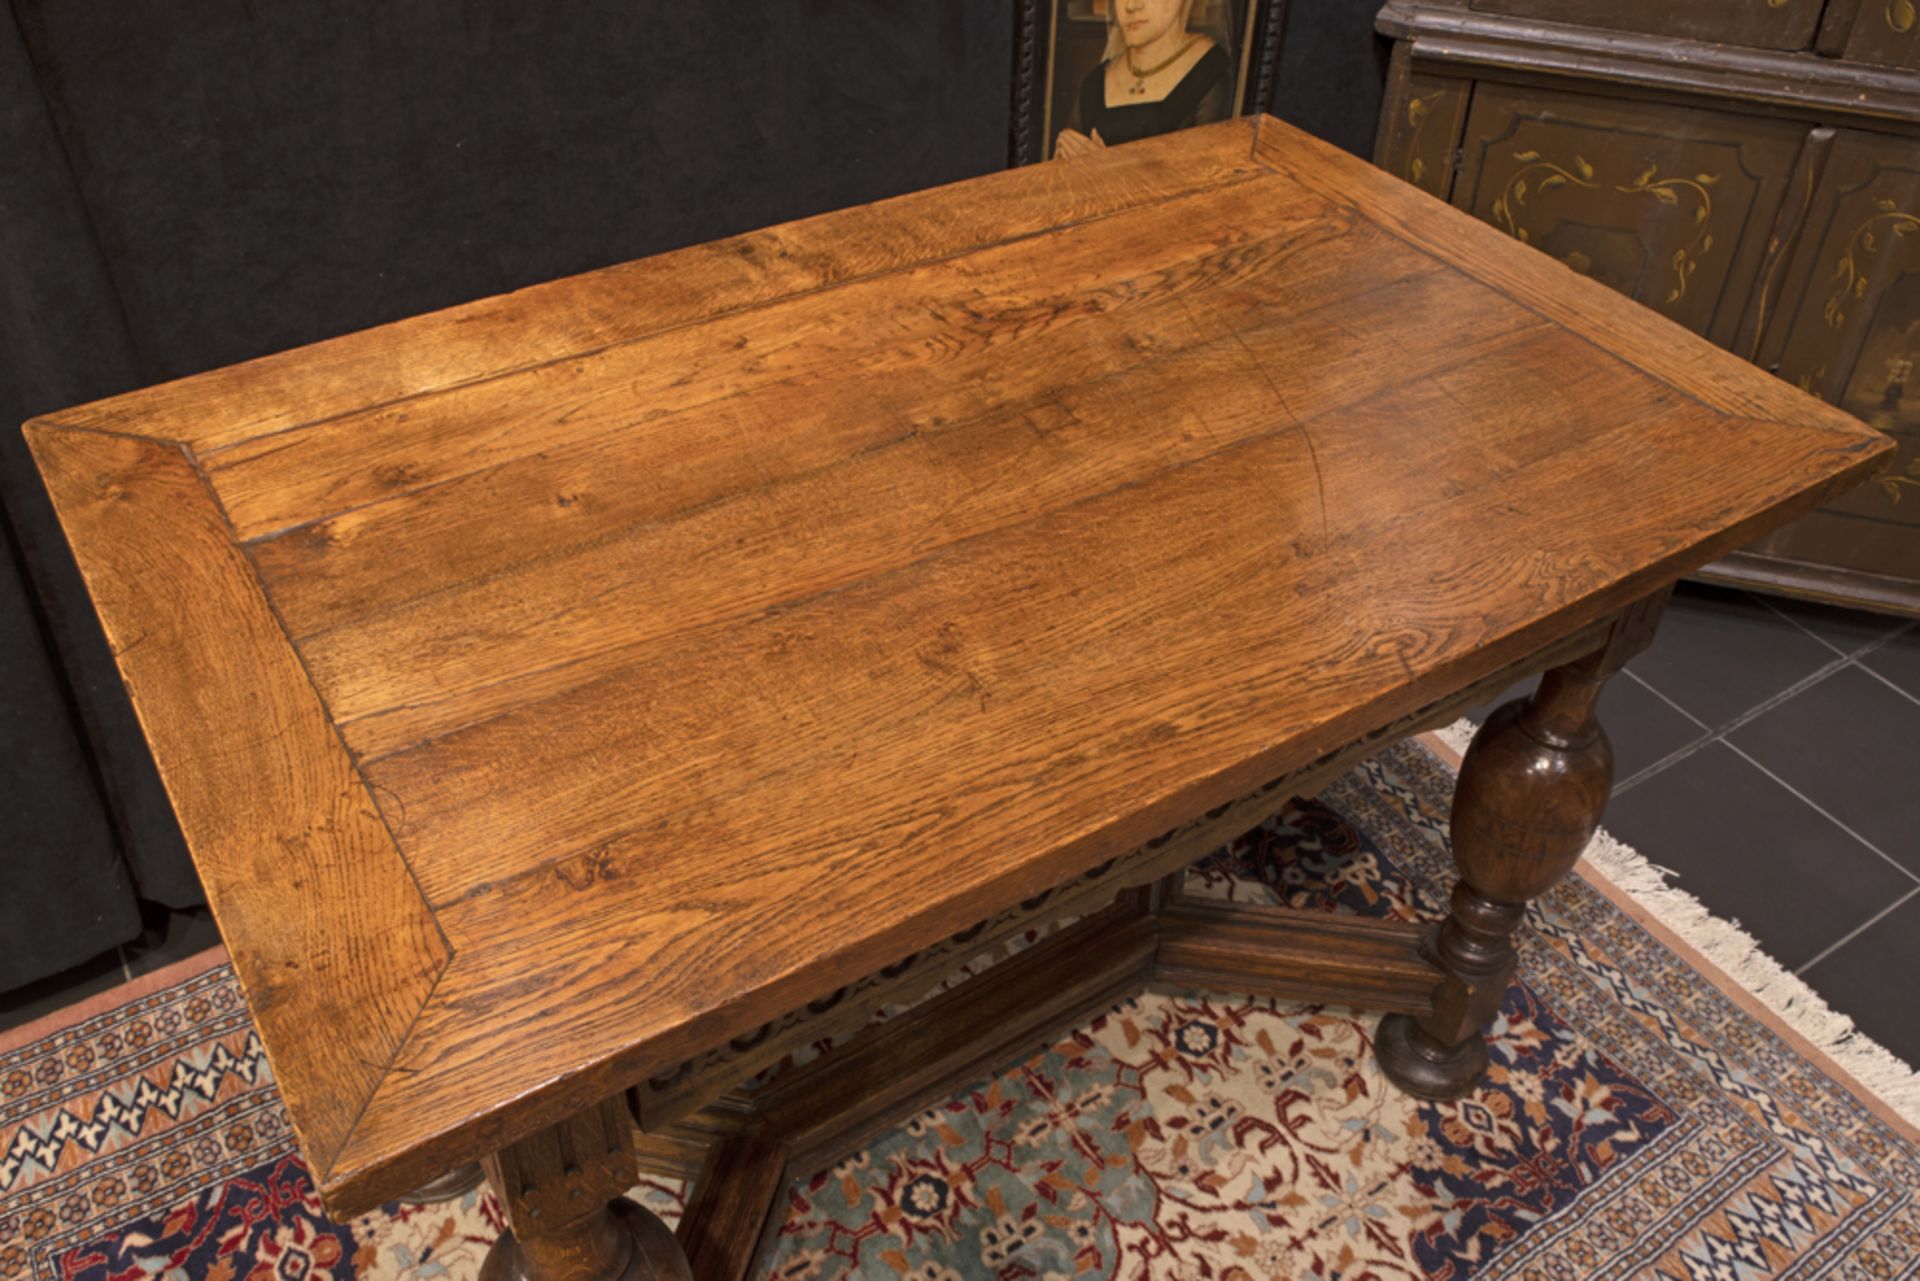 small antique Renaissance style oak table with drawer||Antiek Renaissance betaaltafeltje met lade in - Bild 3 aus 3